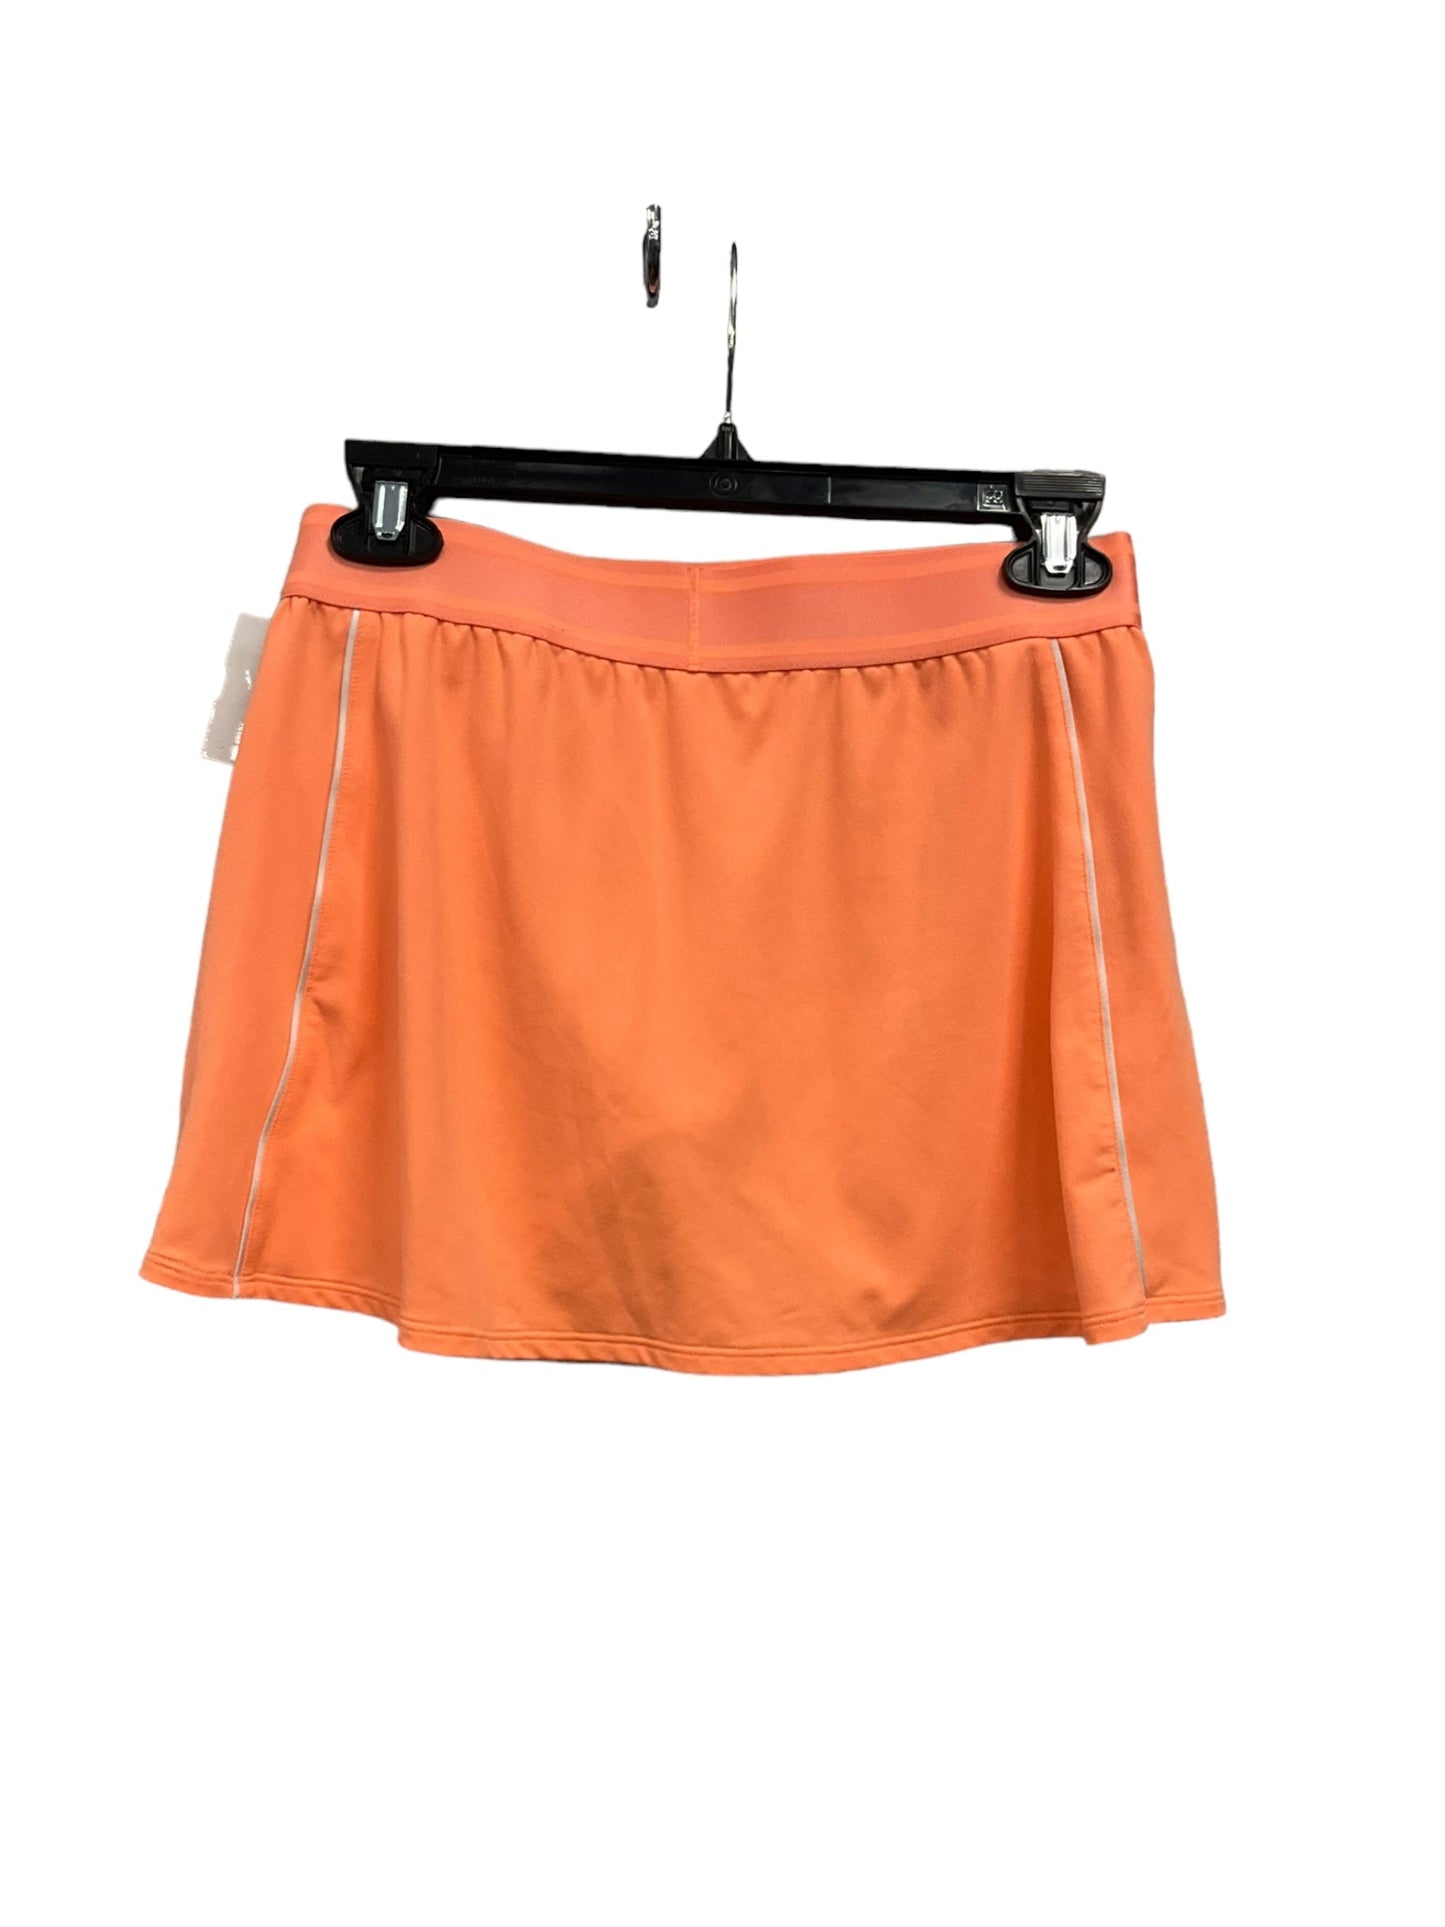 Peach Skirt Mini & Short Nike Apparel, Size S